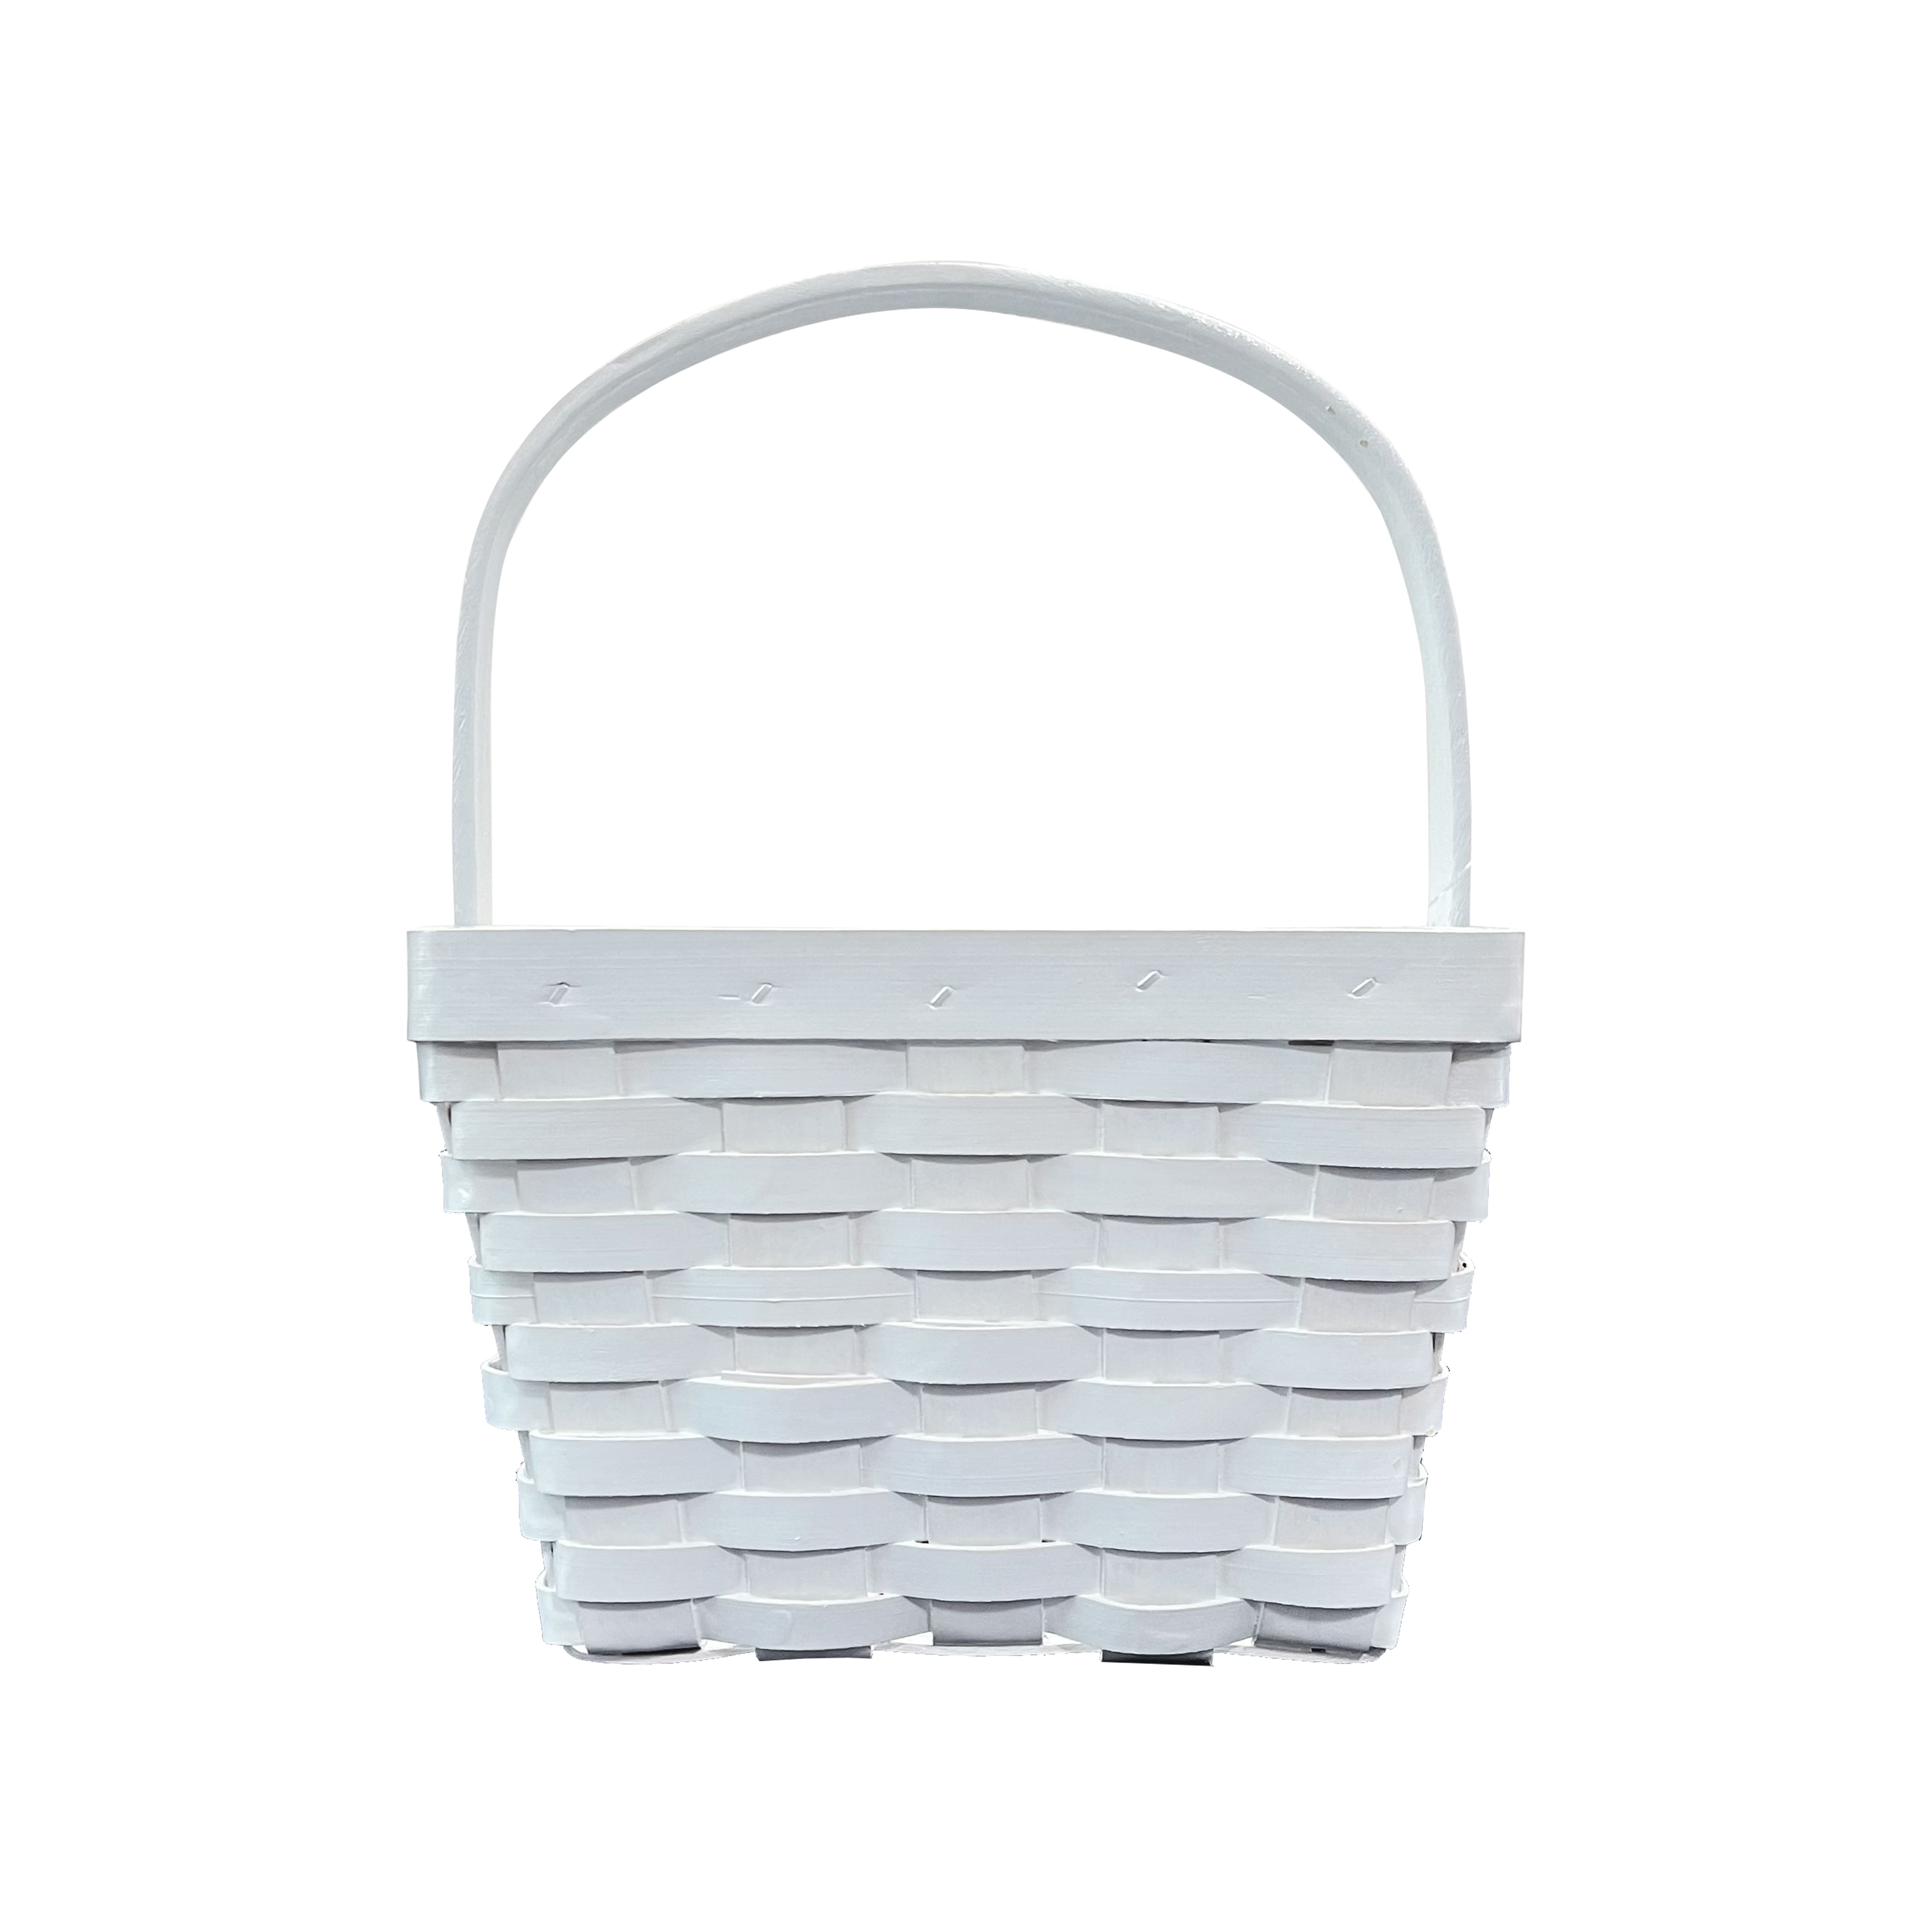 Medium White Square Basket by Ashland&#xAE;